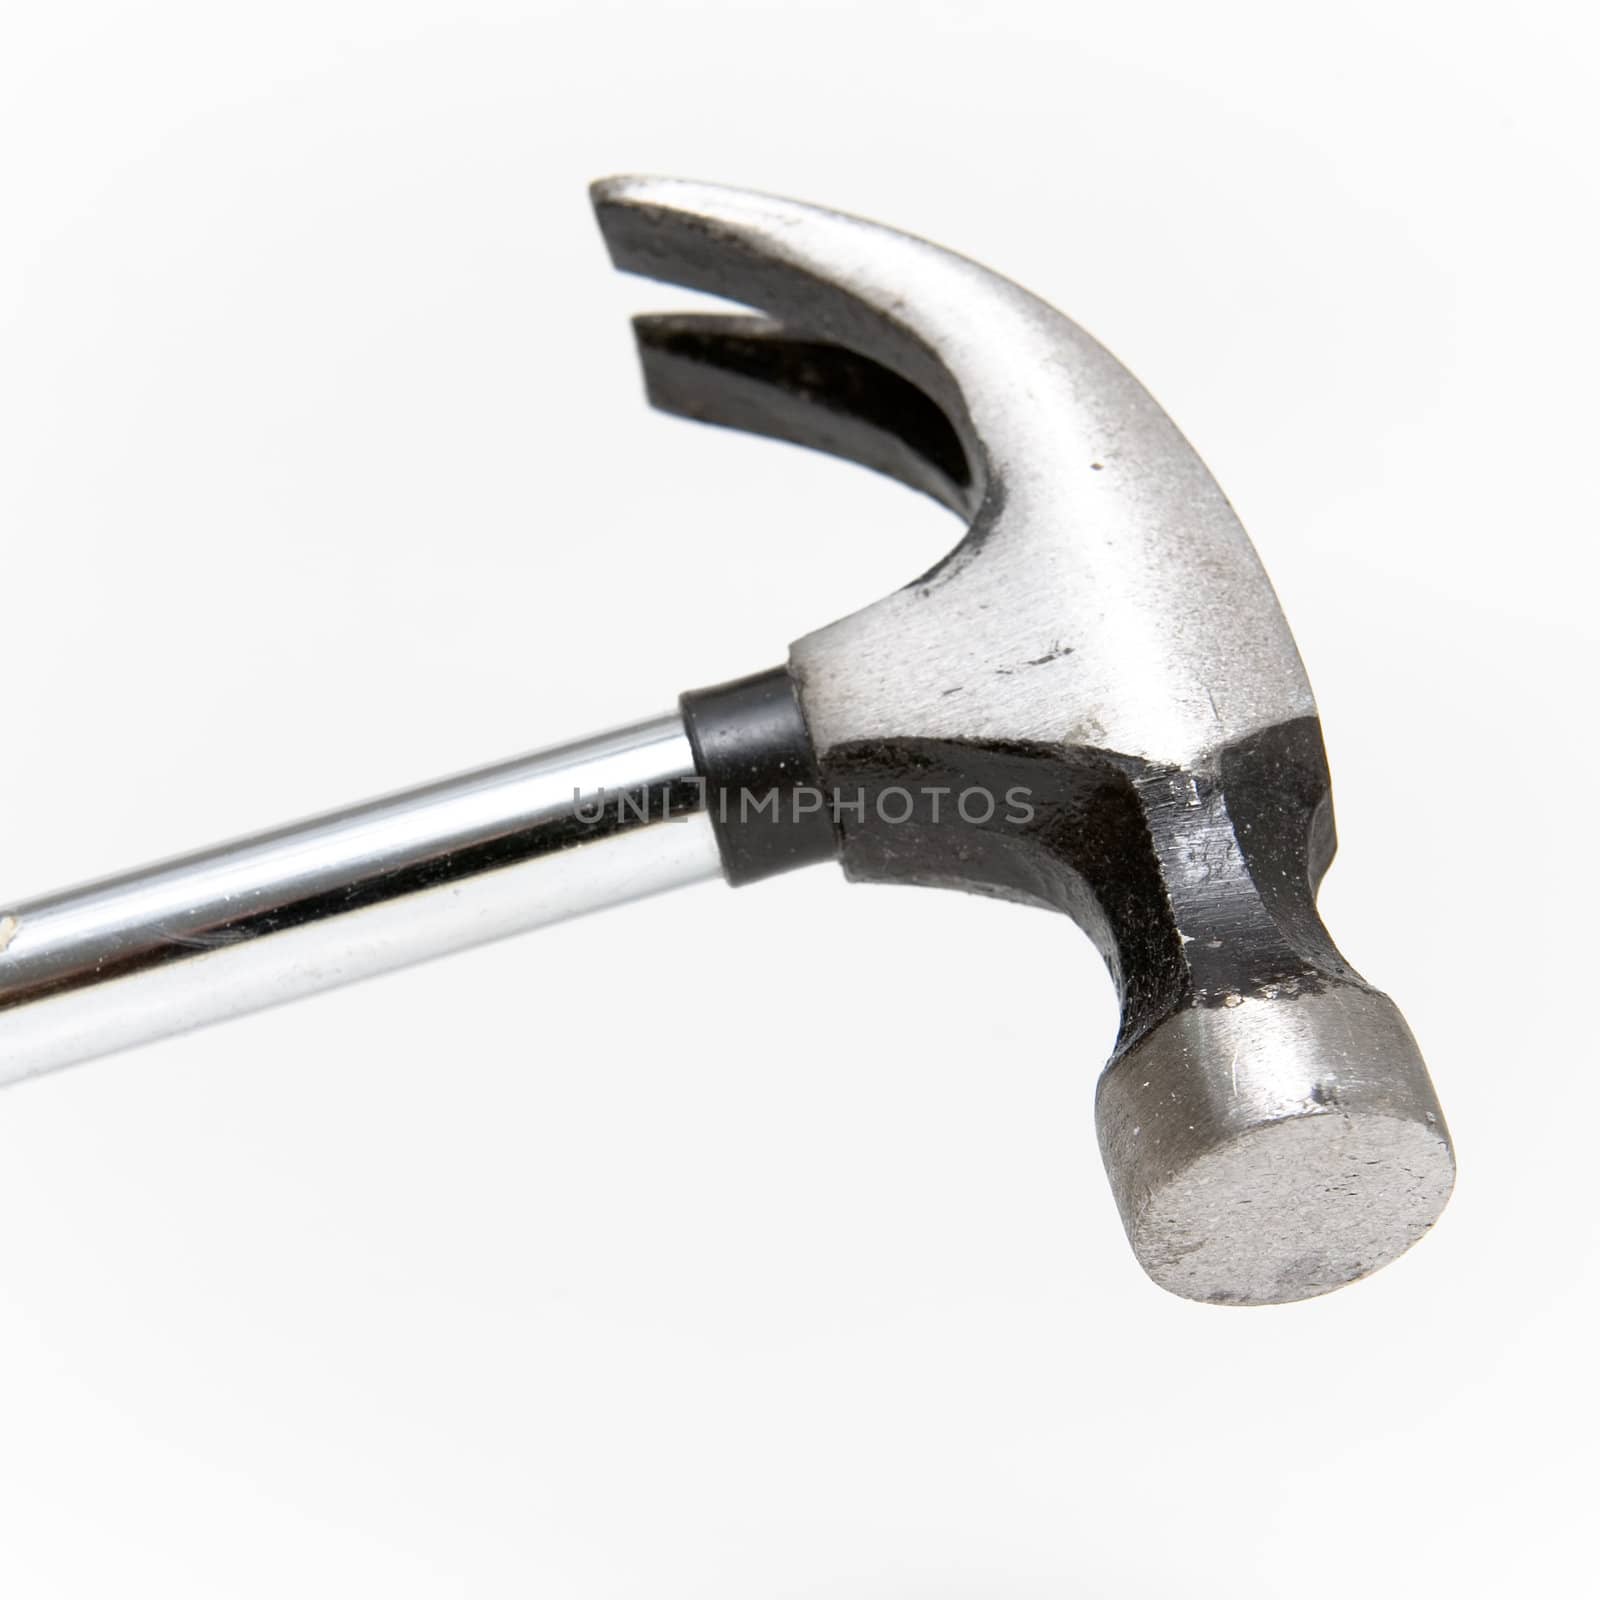 Claw hammer head on white